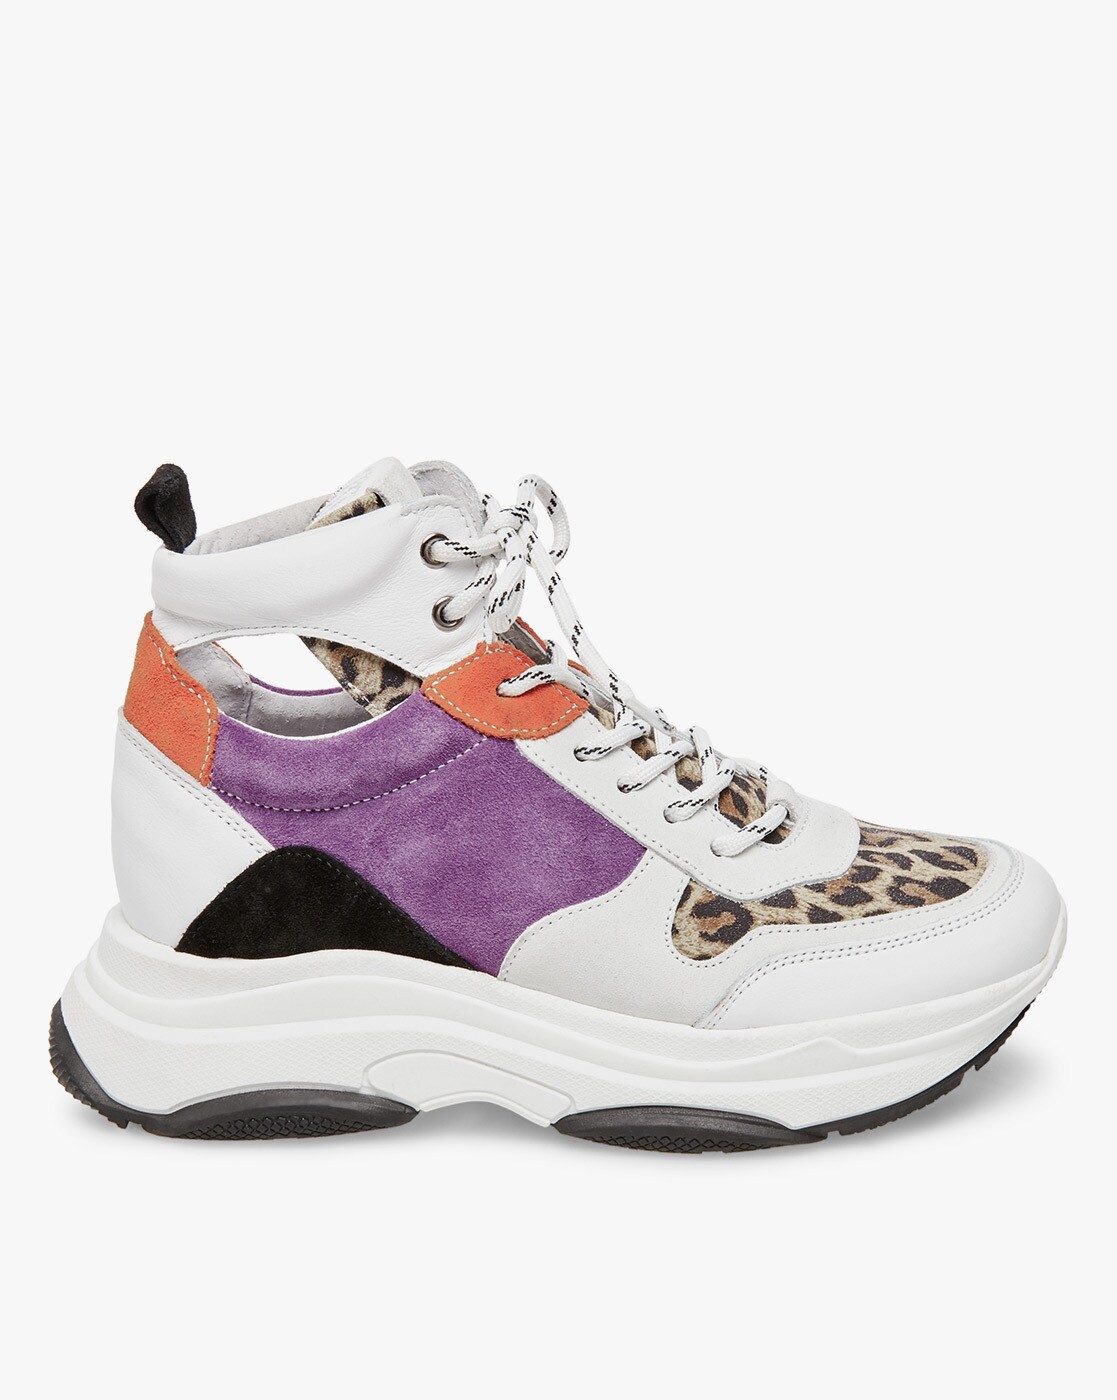 steve madden purple sneakers